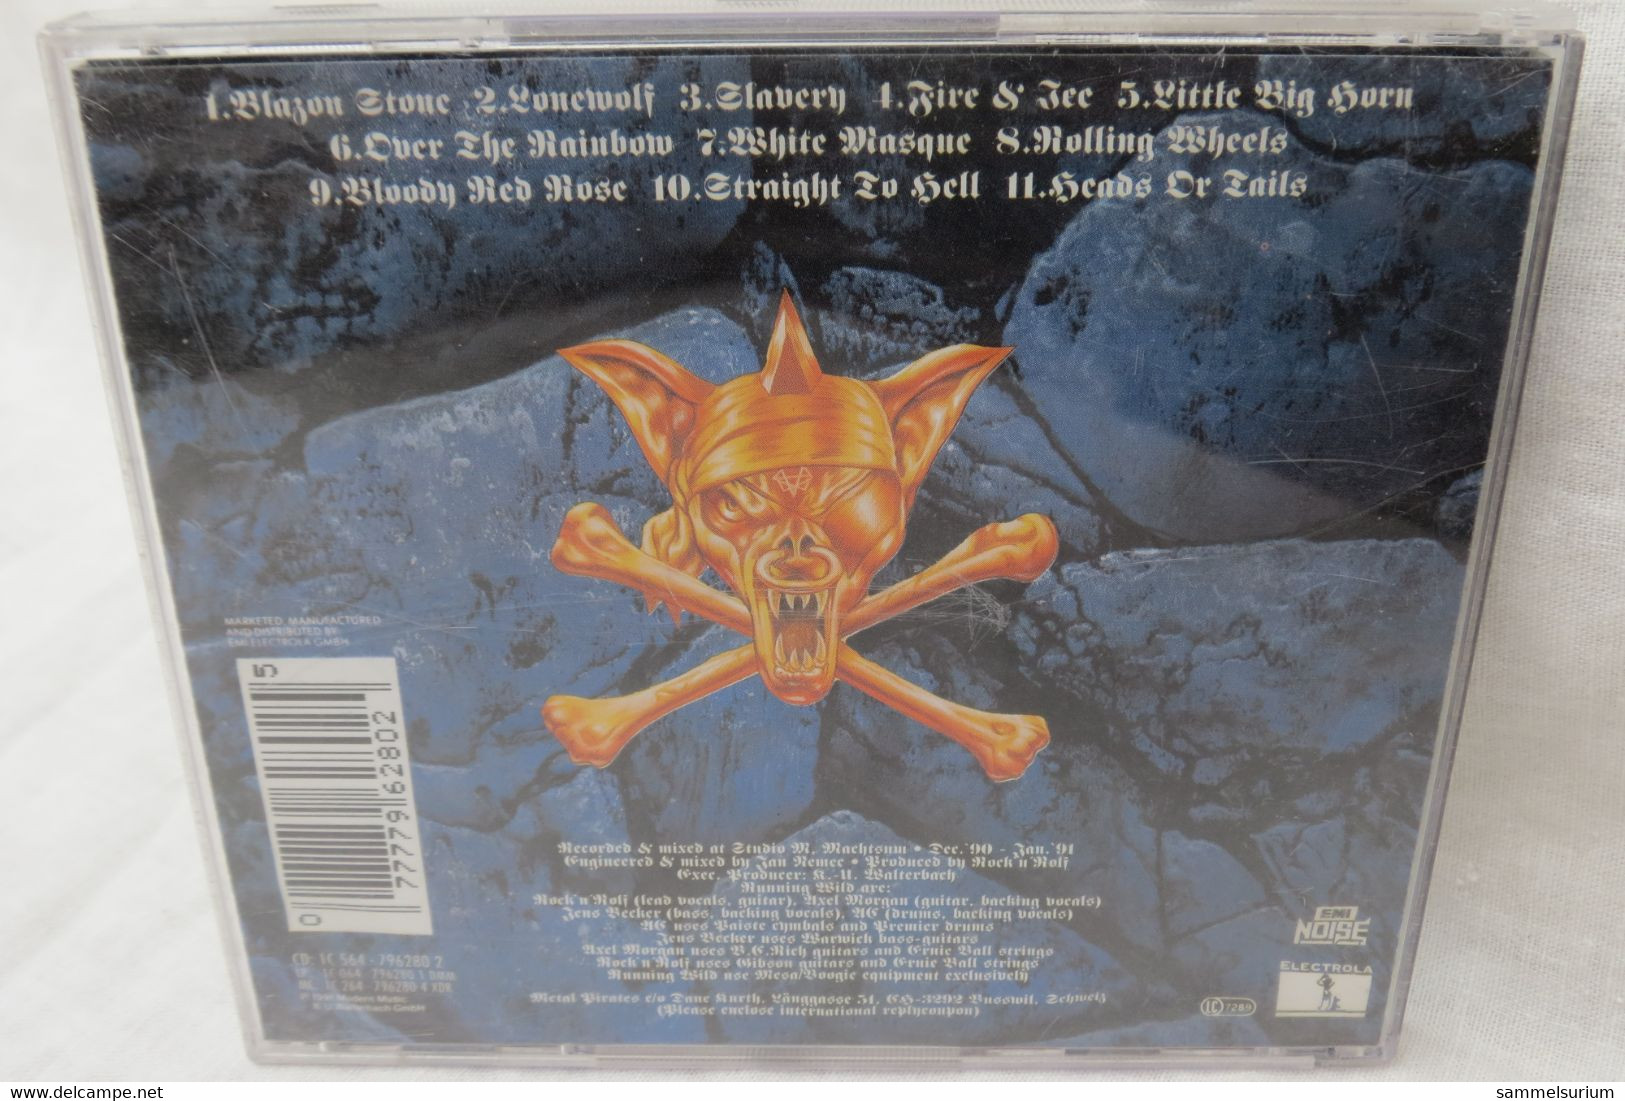 CD "Running Wild" Blazon Stone - Hard Rock & Metal